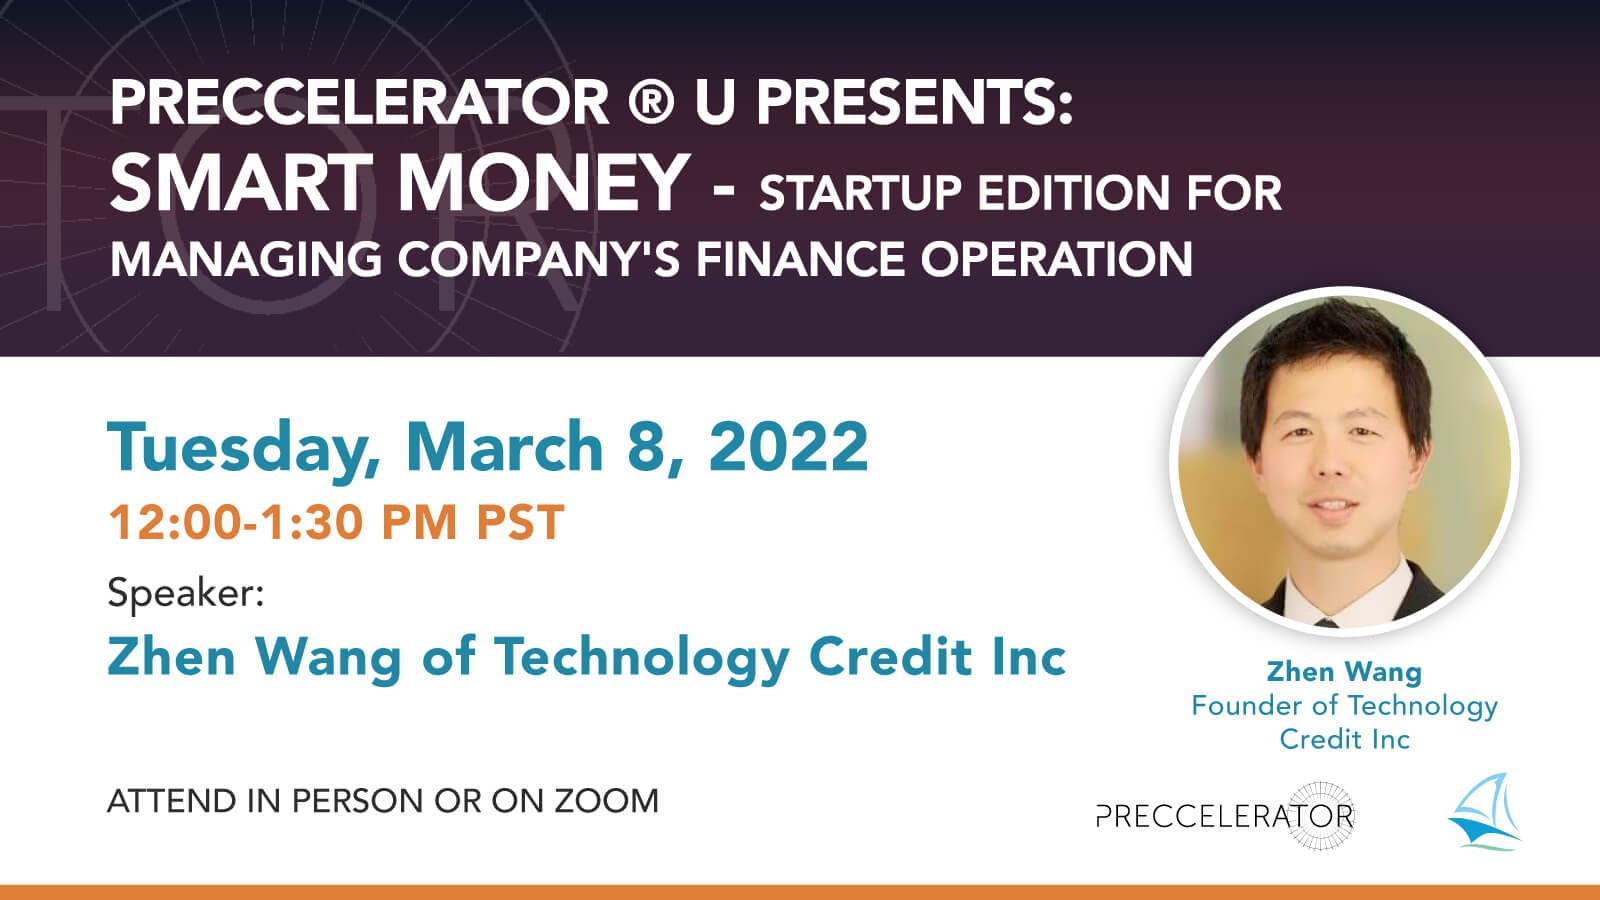 Preccelerator® U Presents: Smart Money - Startup Edition for Managing Company's Finance Operation